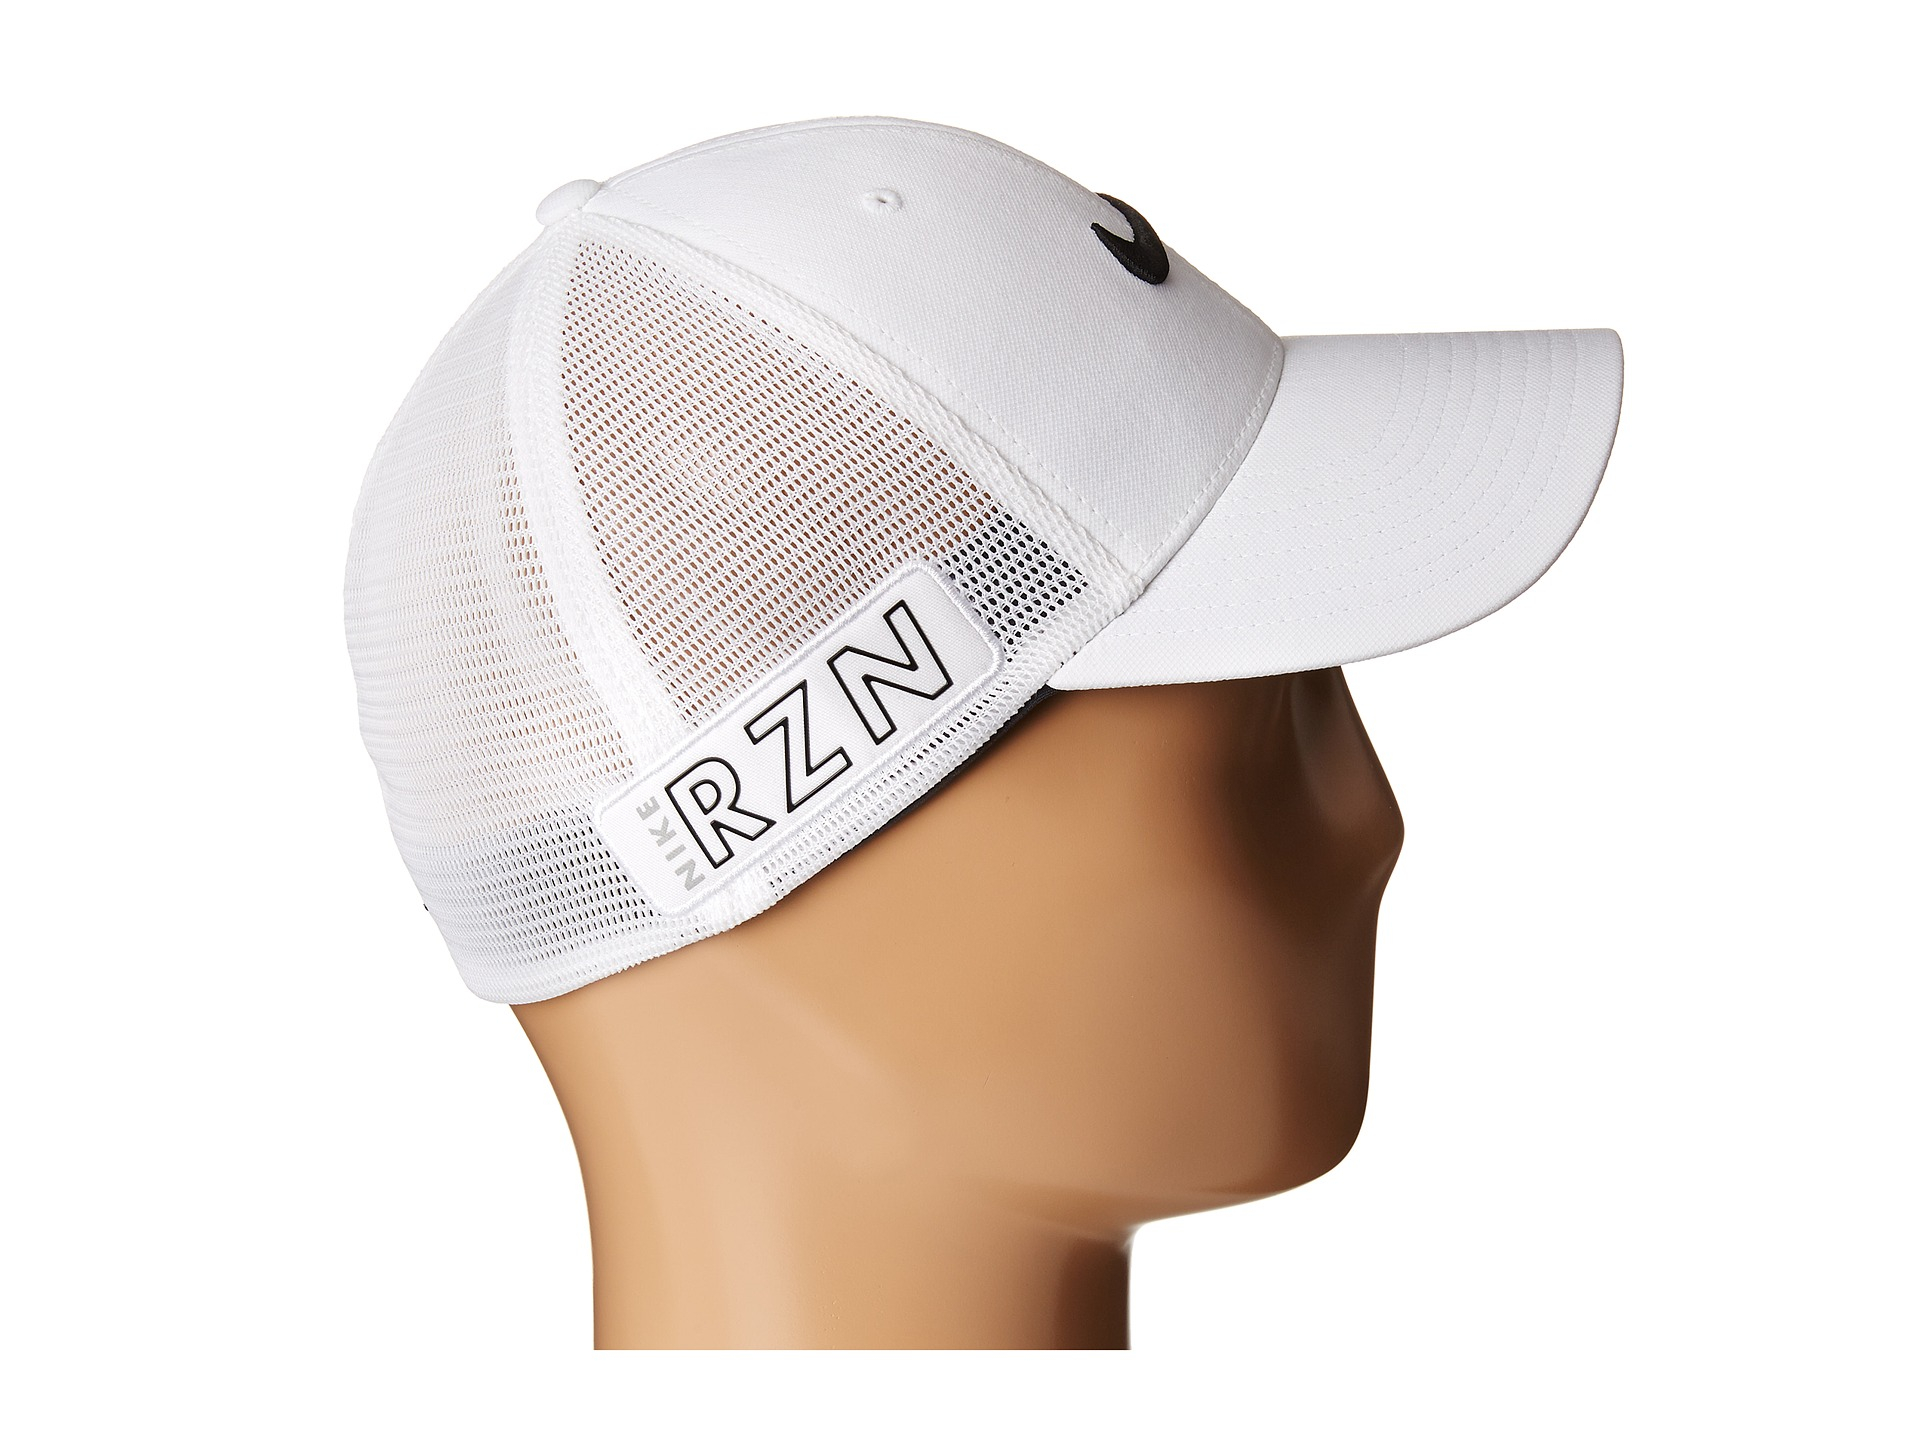 Nike Tour Legacy Mesh Cap in White/White/Black (White) for Men - Lyst